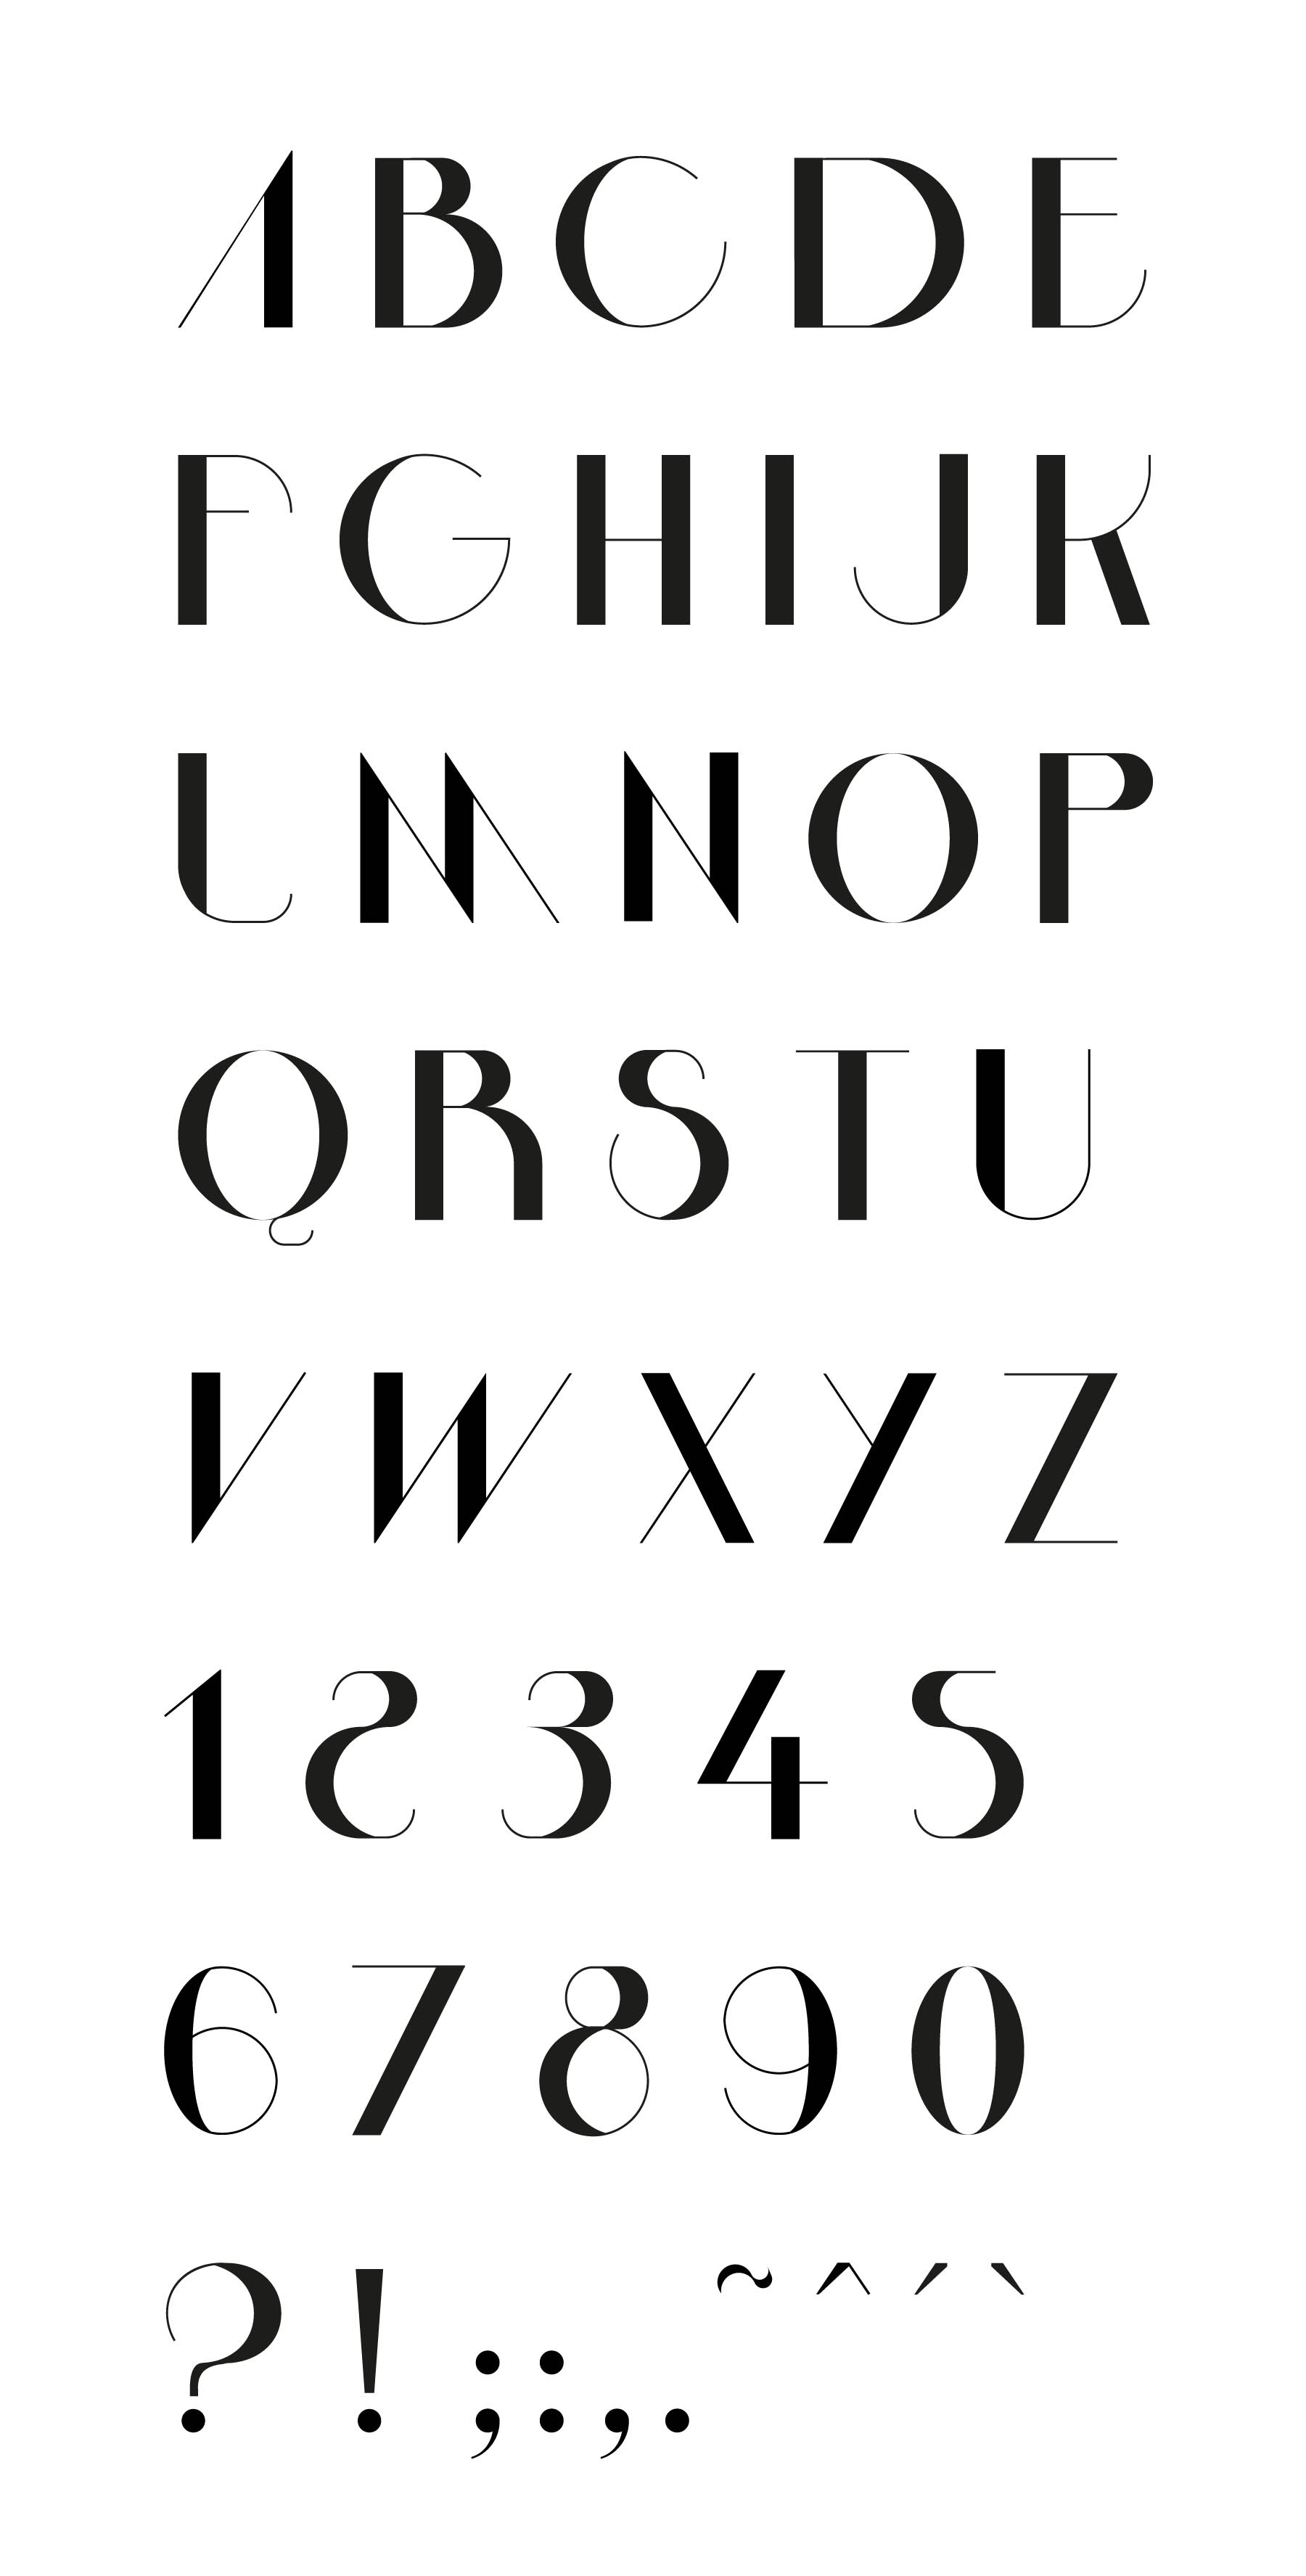 The display typeface Bossa Nova